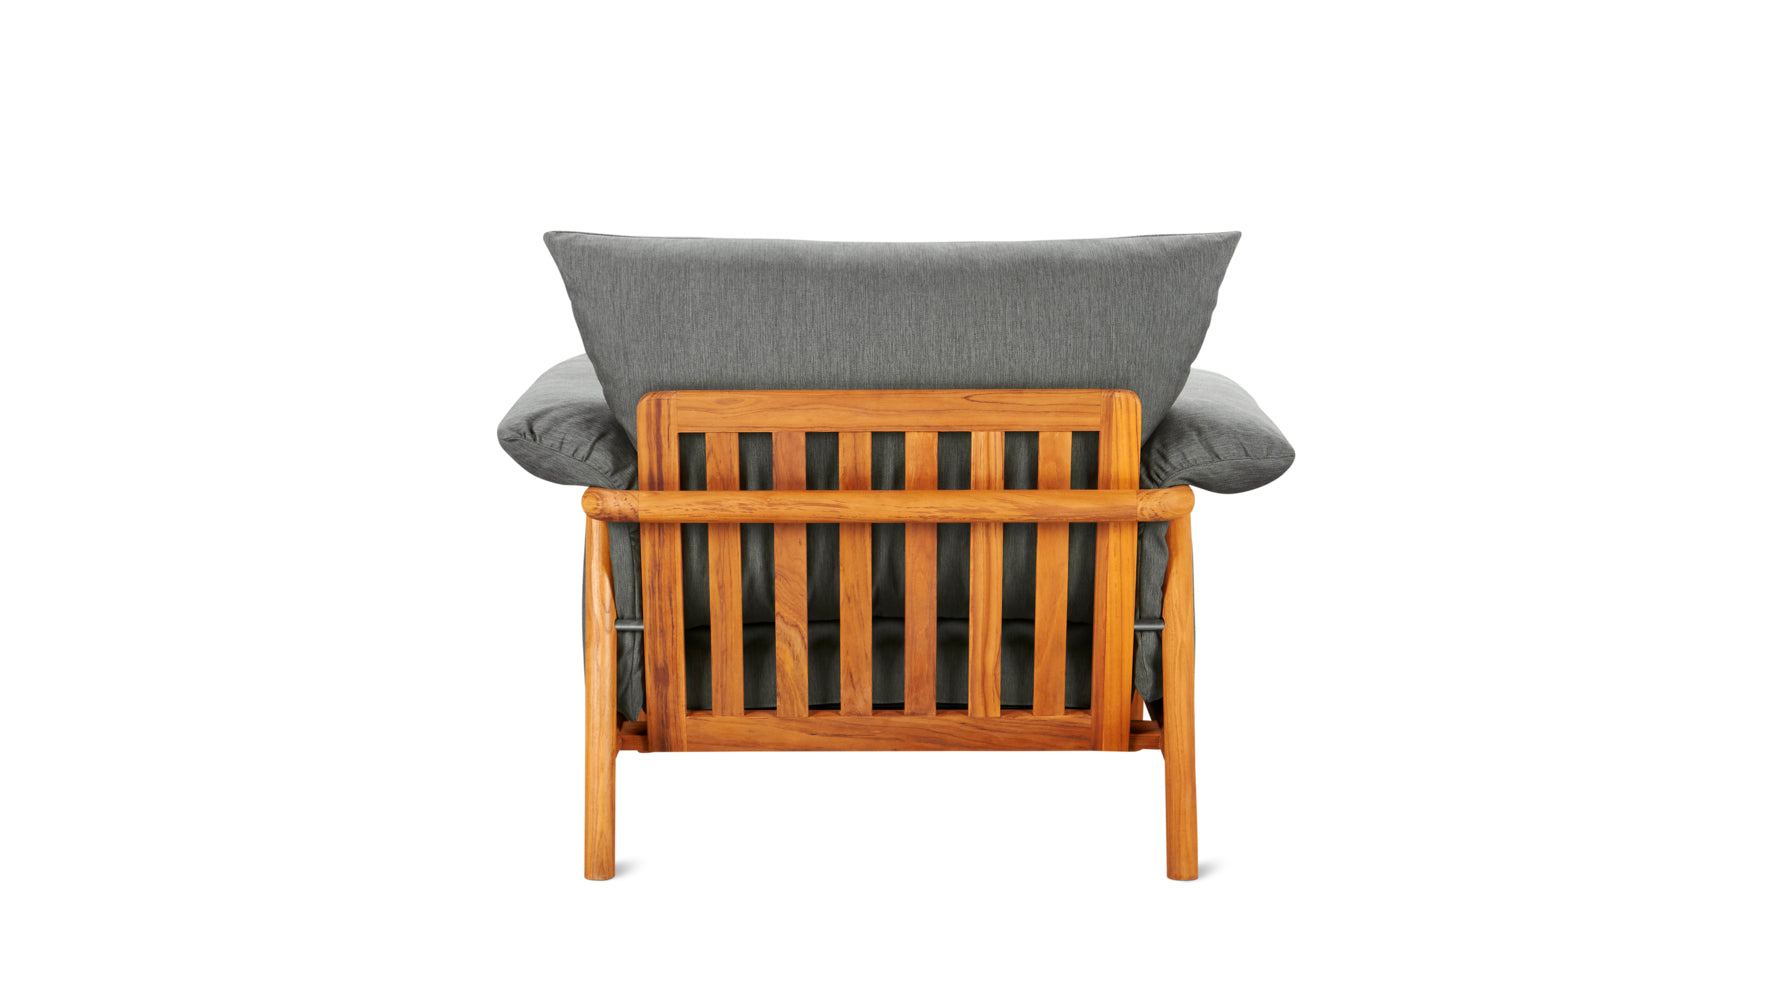 Pillow Talk Outdoor Lounge Chair, Pepper - Image 4